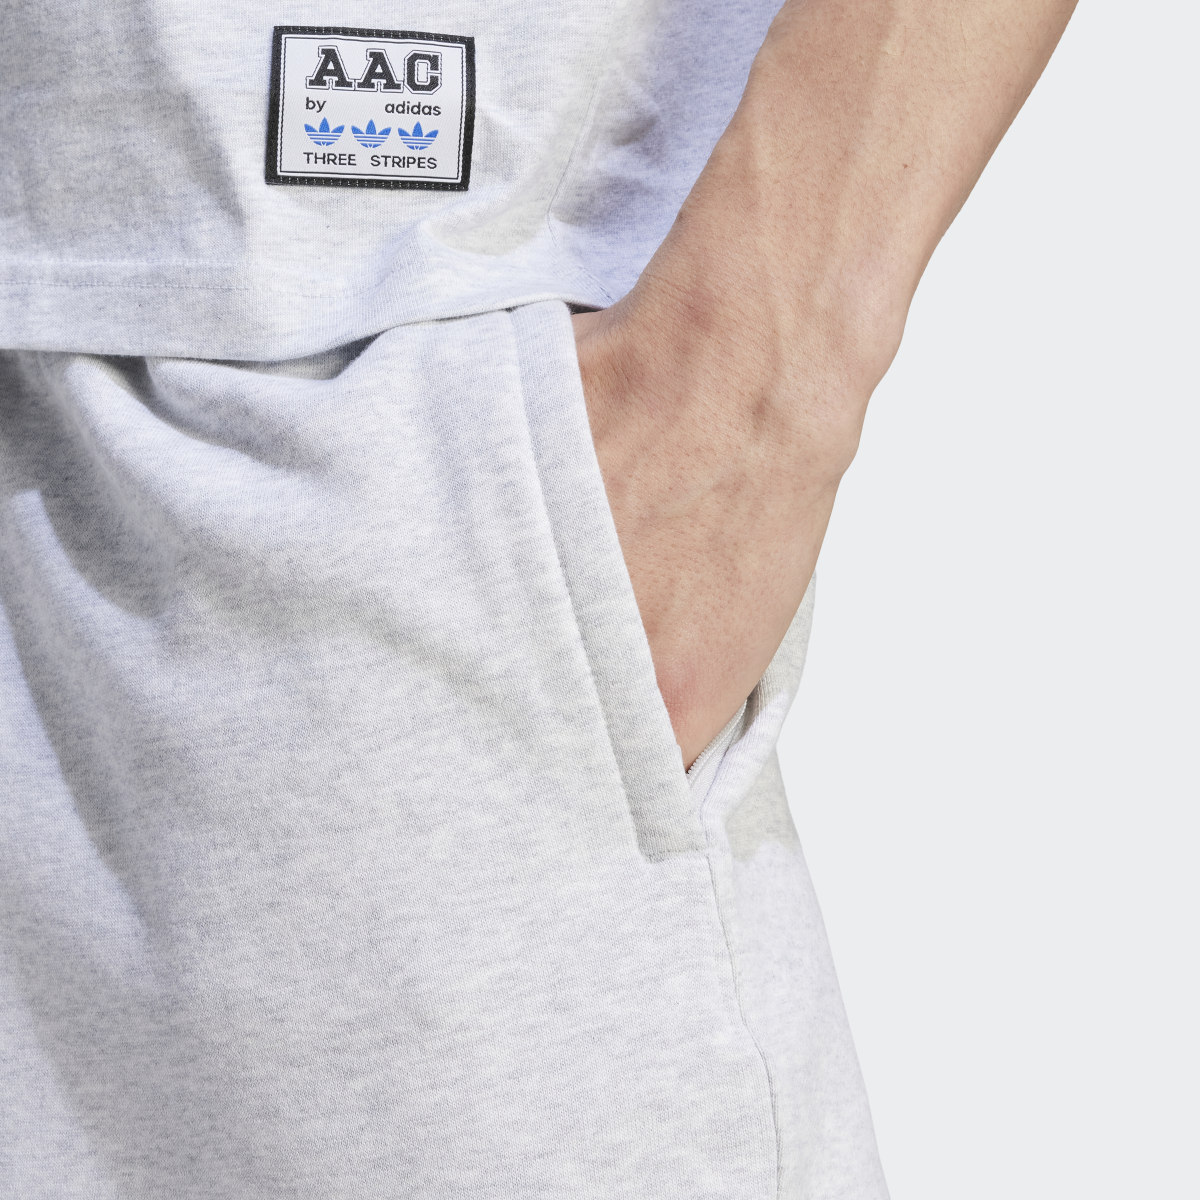 Adidas AAC Shorts. 8